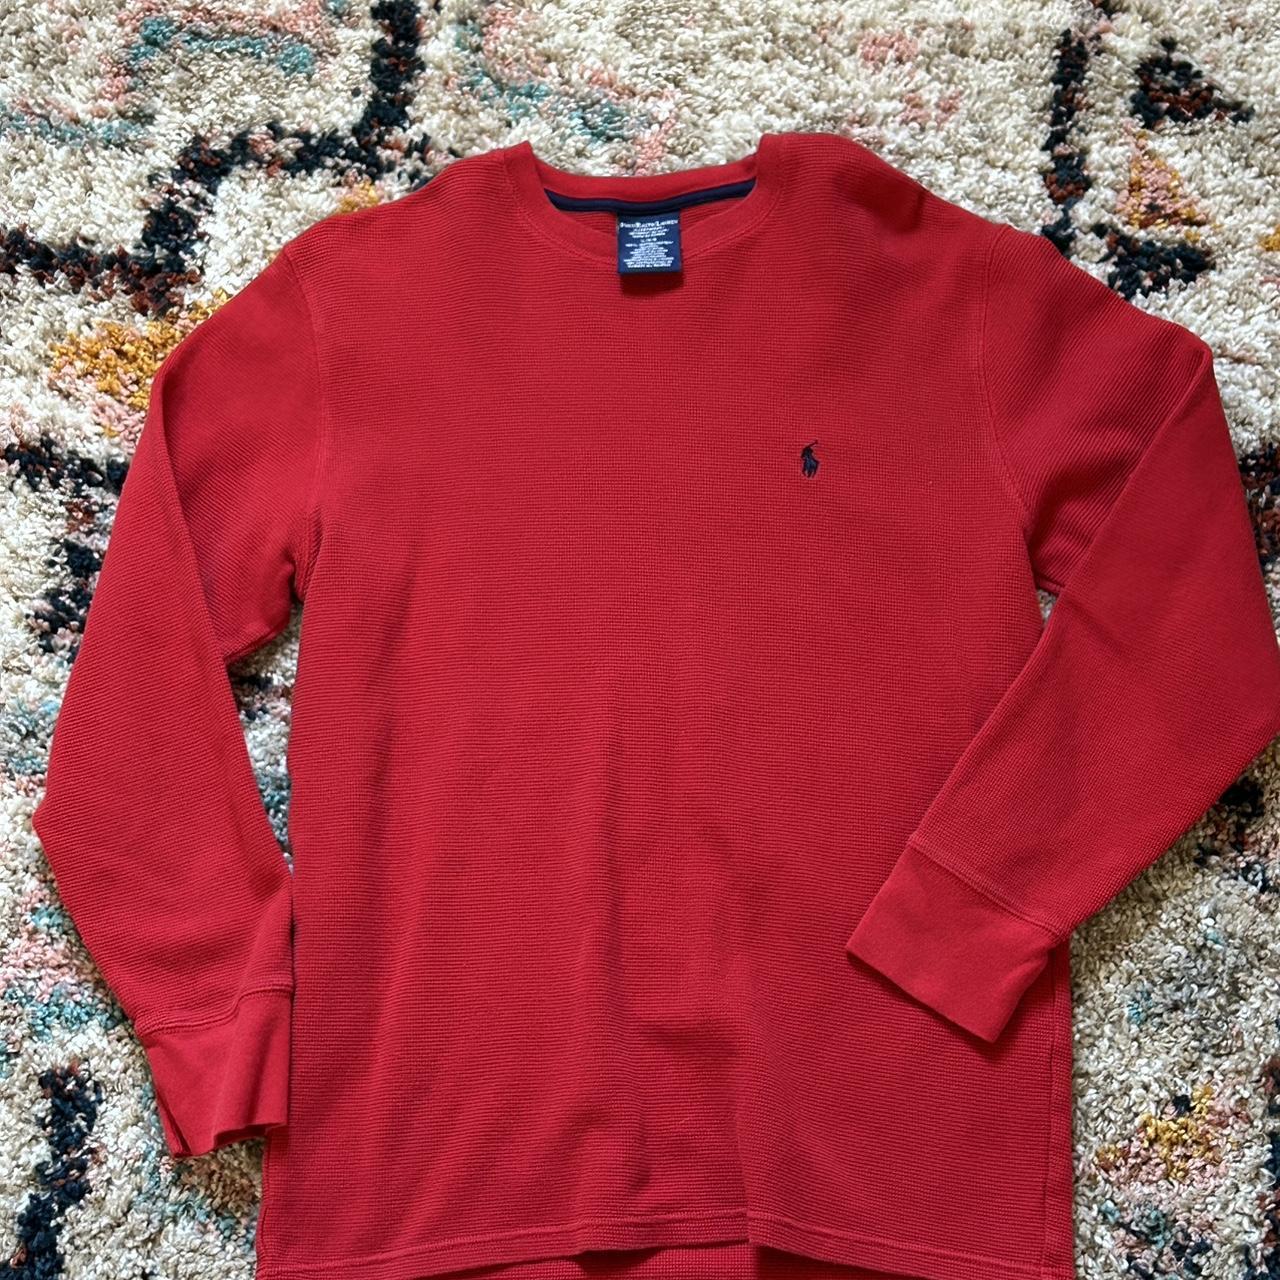 Polo Ralph Lauren Longsleeve “Sleepwear” Shirt Size... - Depop